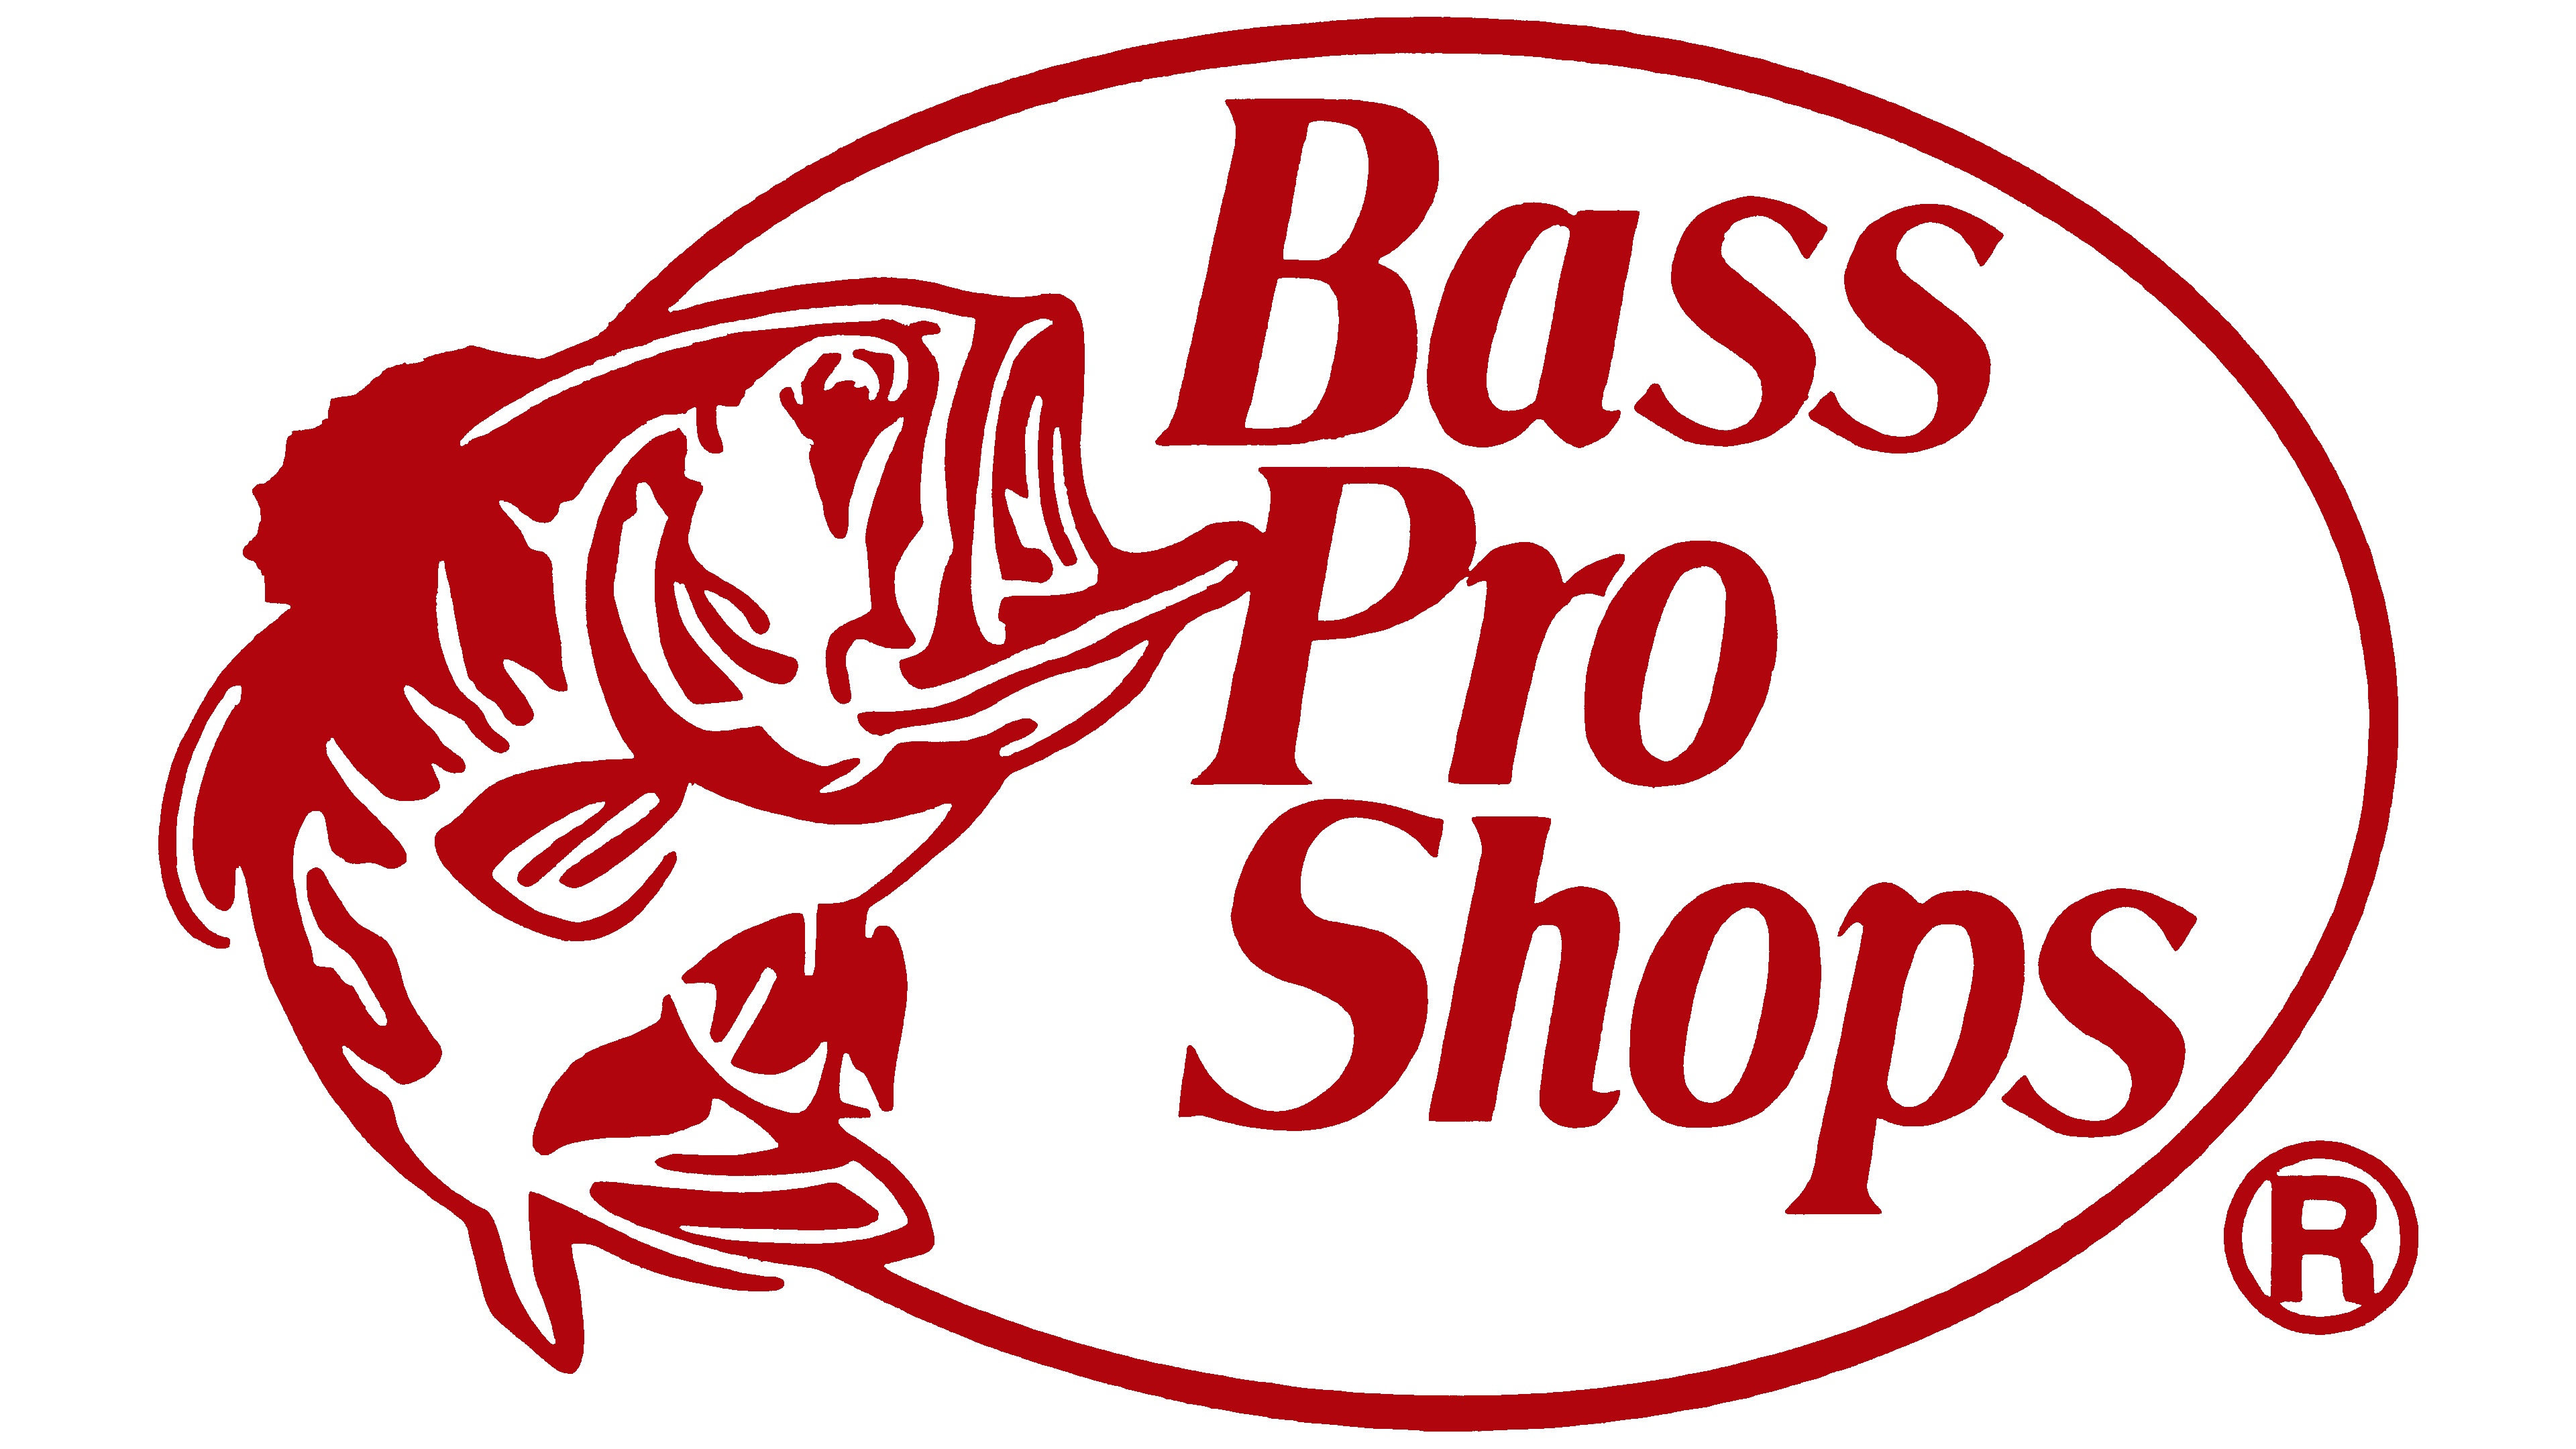 Bass Pro shops logo. Магазины Bass Pro shop. Bass co логотип. Bass Pro shops футболка. Басс магазин